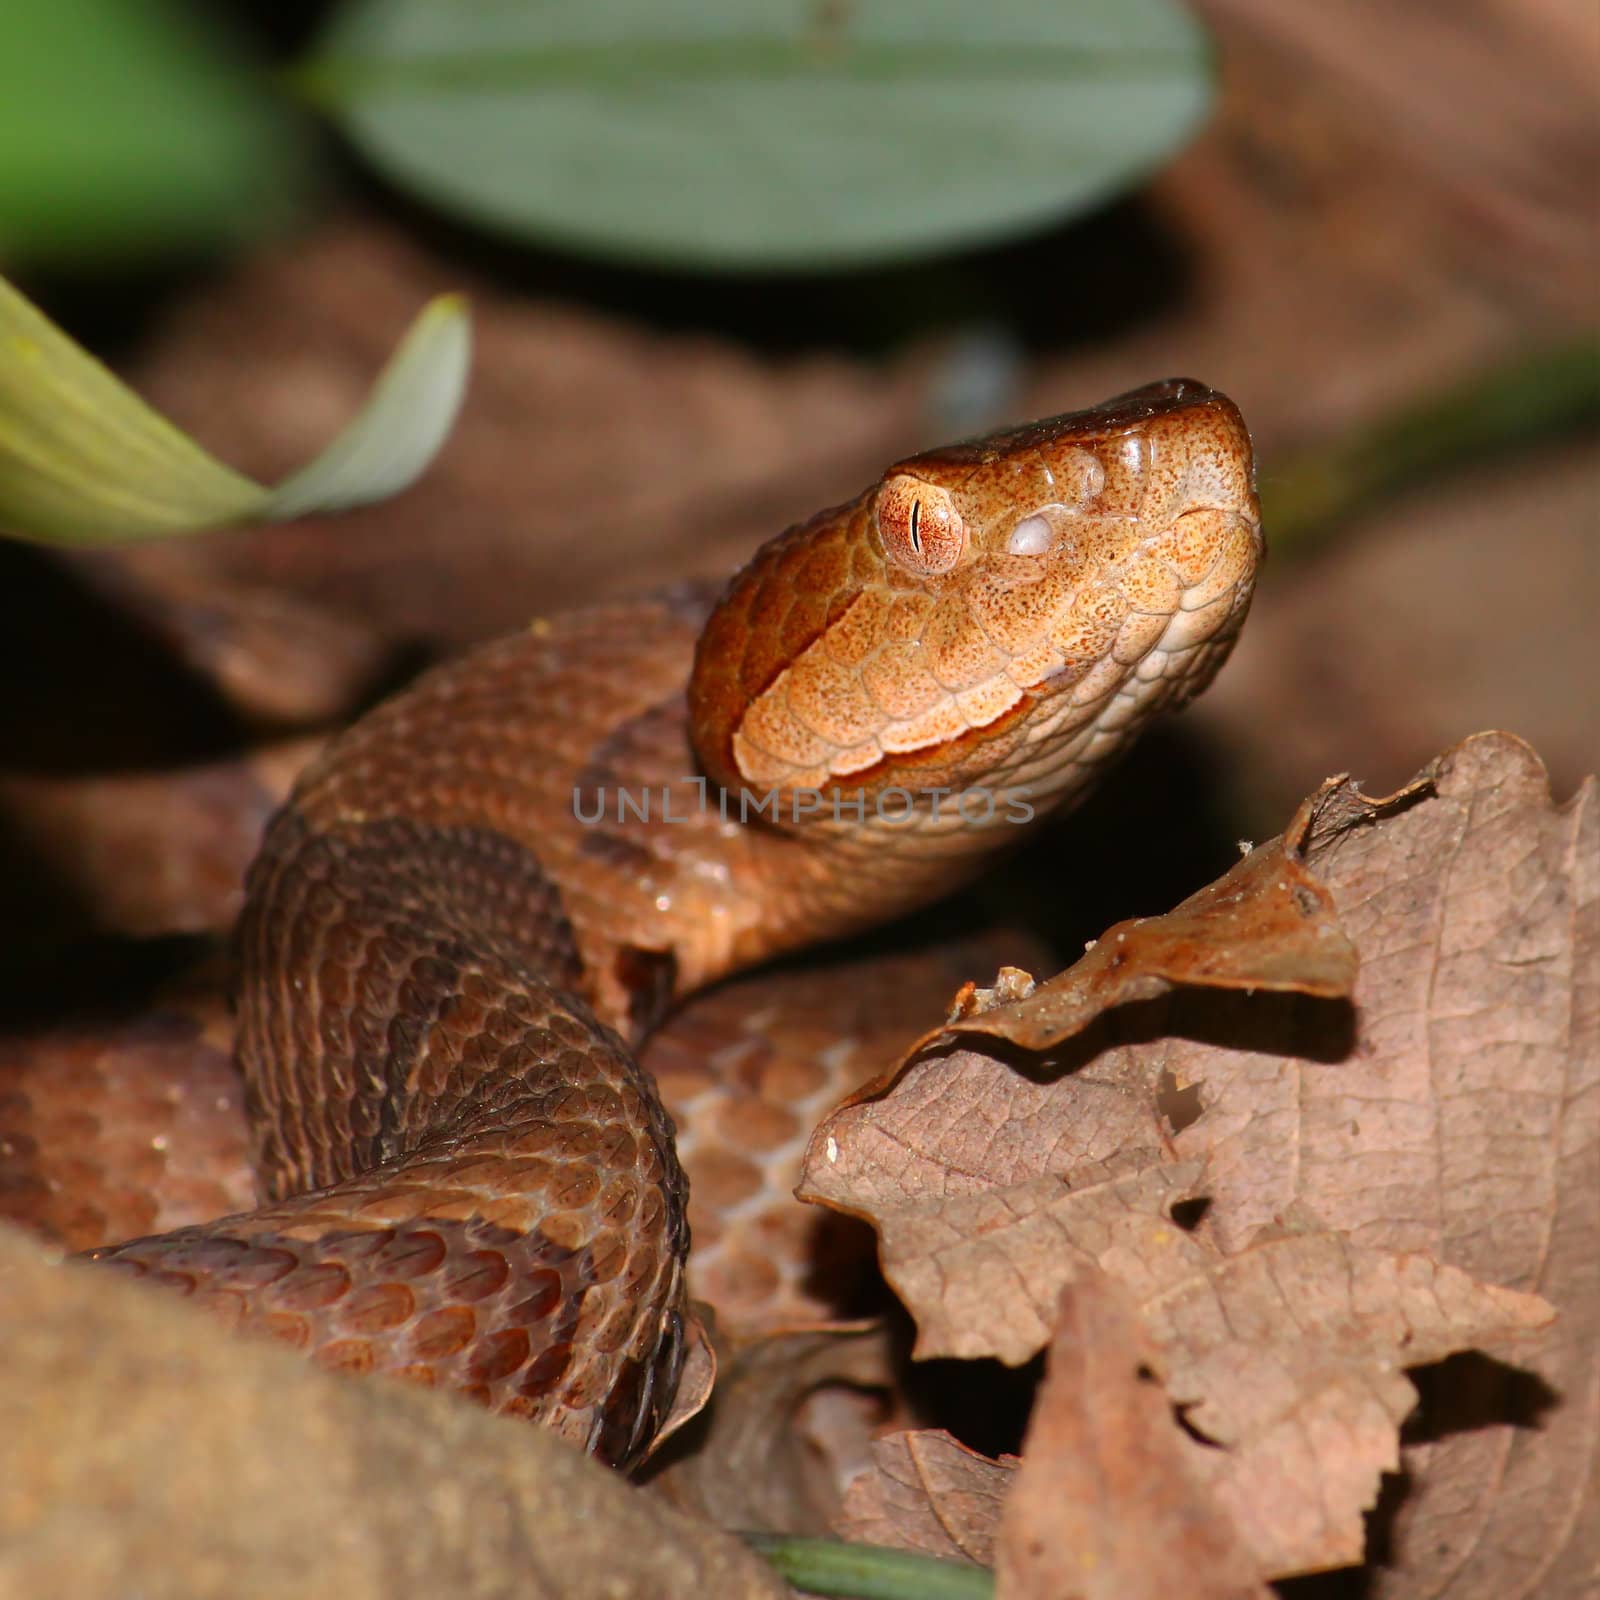 A venomous Copperhead (Agkistrodon contortrix) snake at Monte Sano State Park in Alabama.